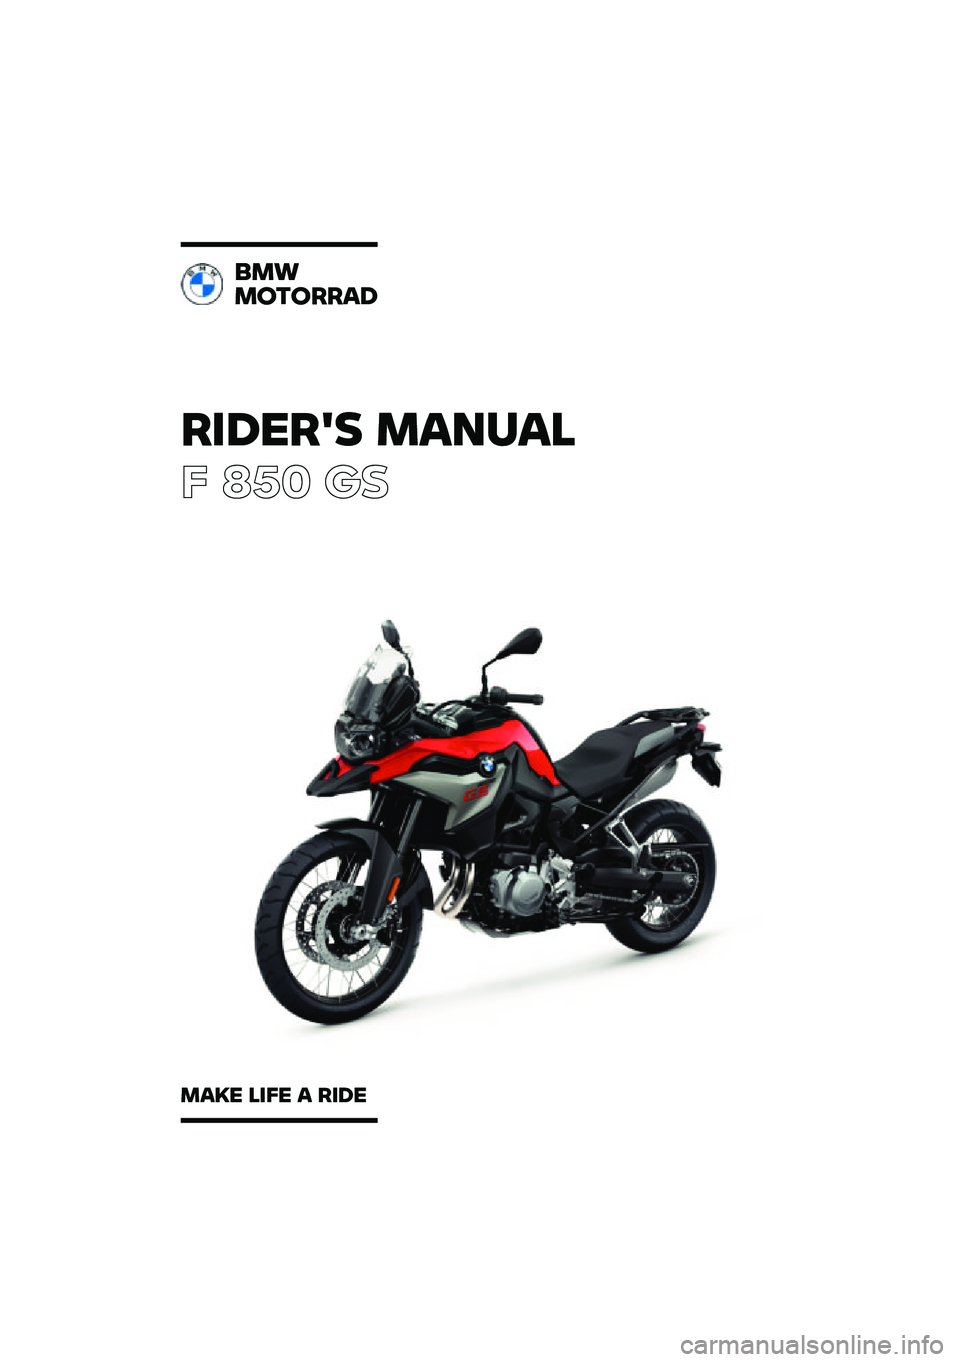 BMW MOTORRAD F 850 GS 2021  Riders Manual (in English) ������� �\b�	�
��	�\f
� ��� �	�

�
�\b�
�\b������	�
�\b�	�� �\f��� �	 ���� 